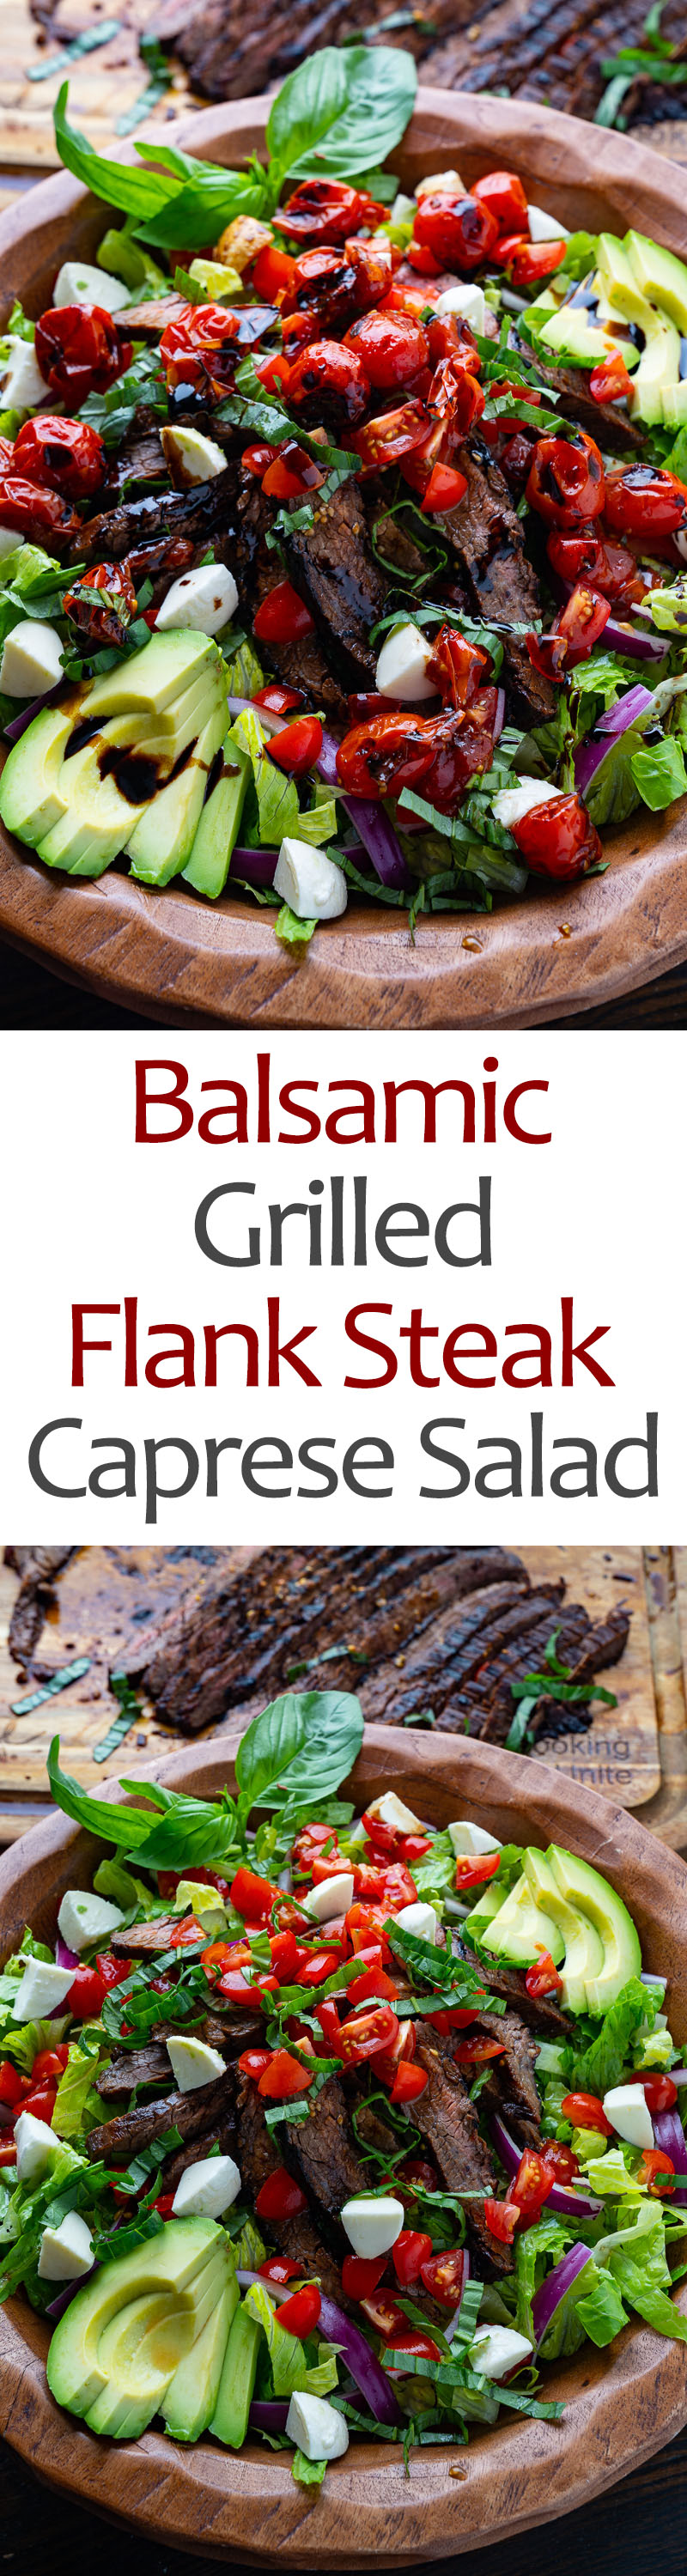 Balsamic Grilled Flank Steak Caprese Salad